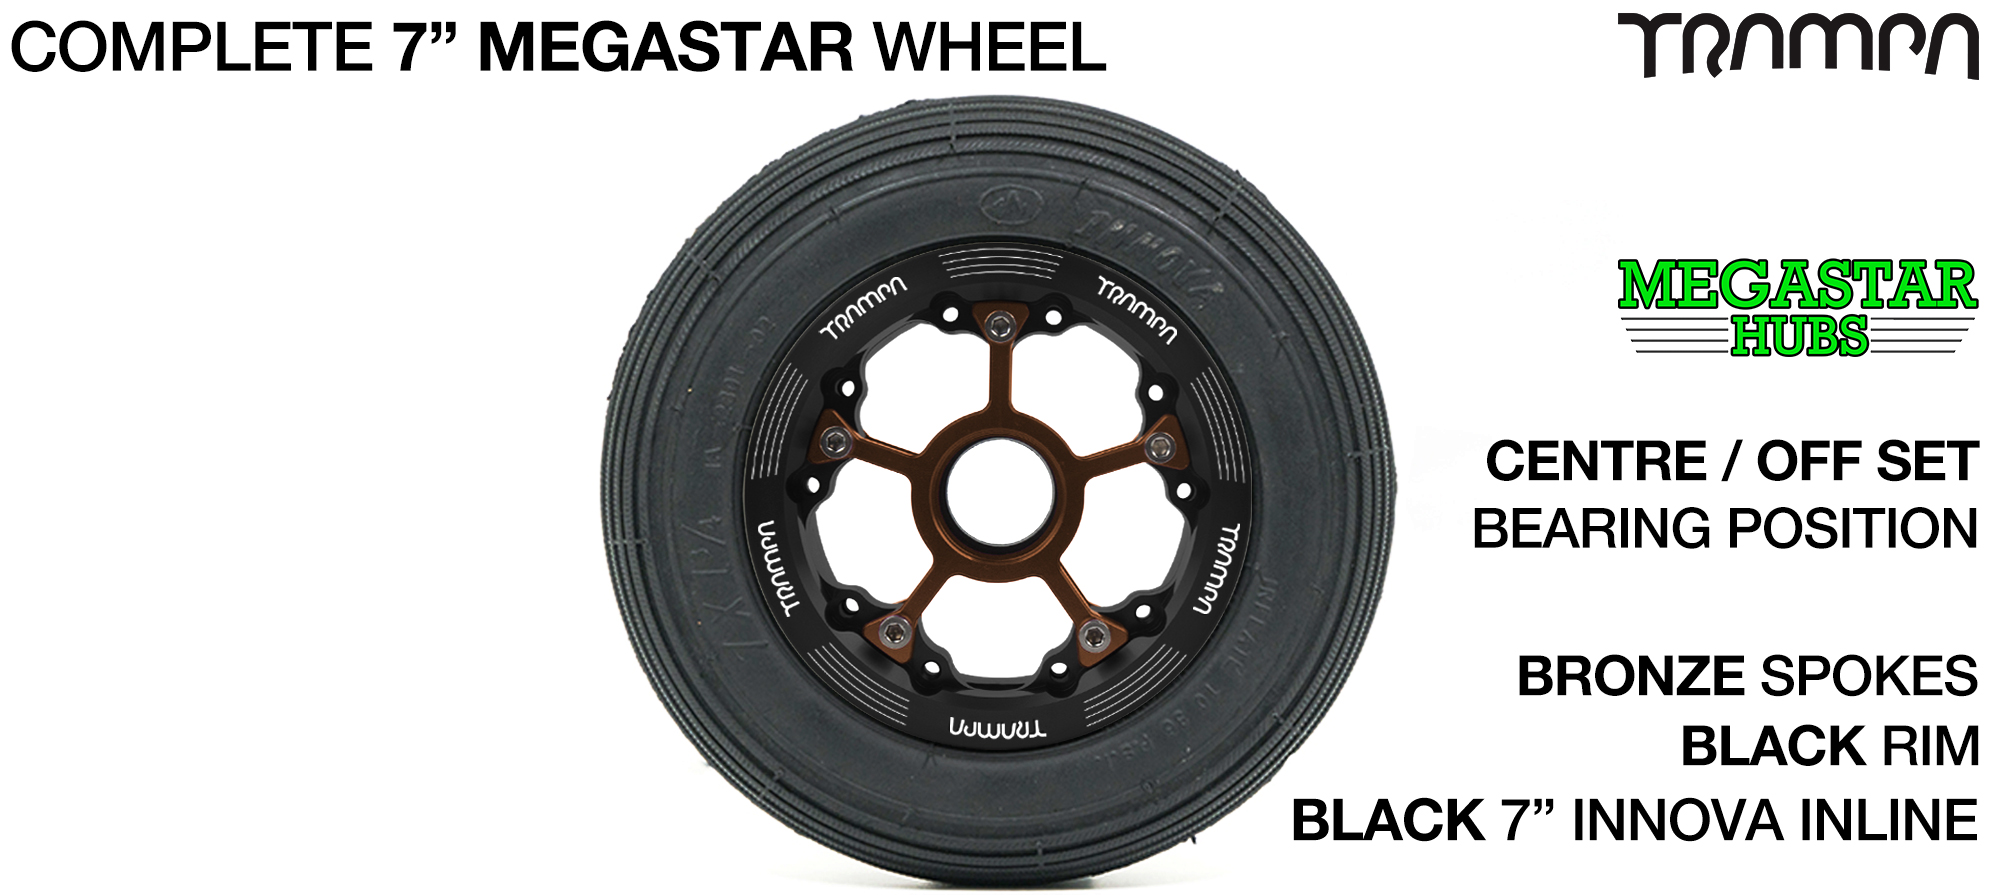 BLACK MEGASTAR Rims with BRONZE Spokes & 7 Inch Tyres